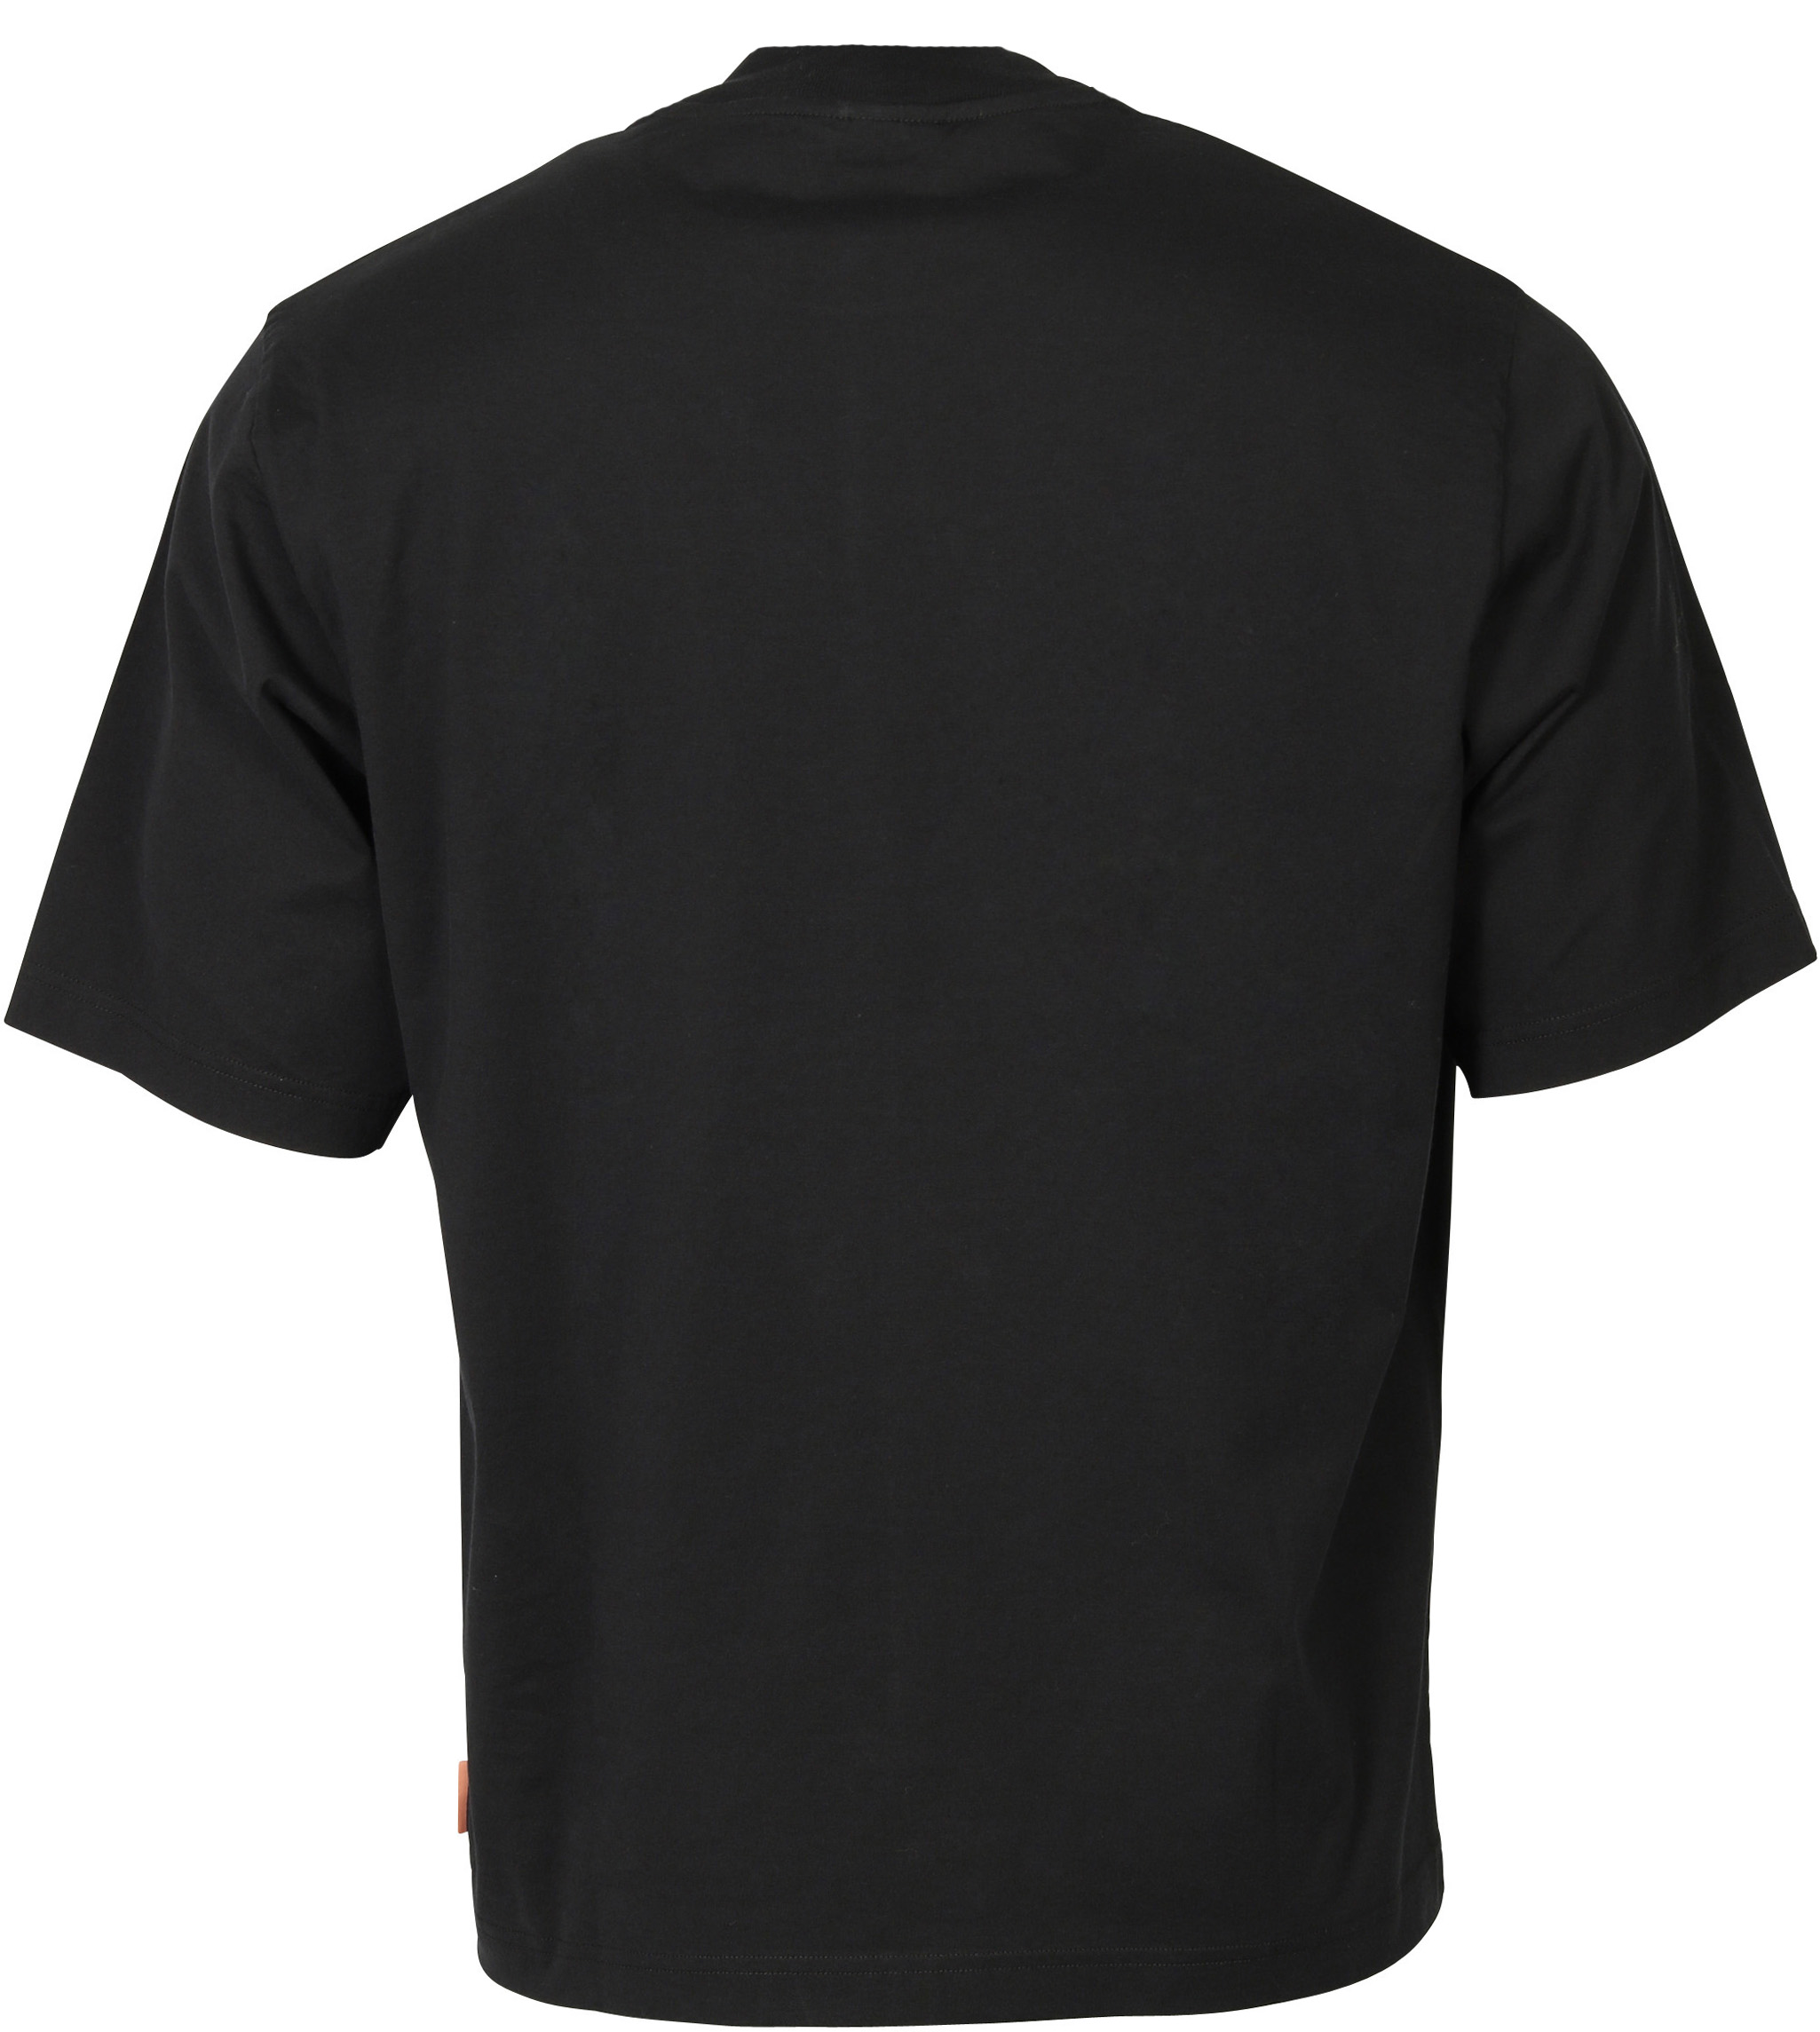 Acne Studios Turtleneck T-Shirt Esco Black